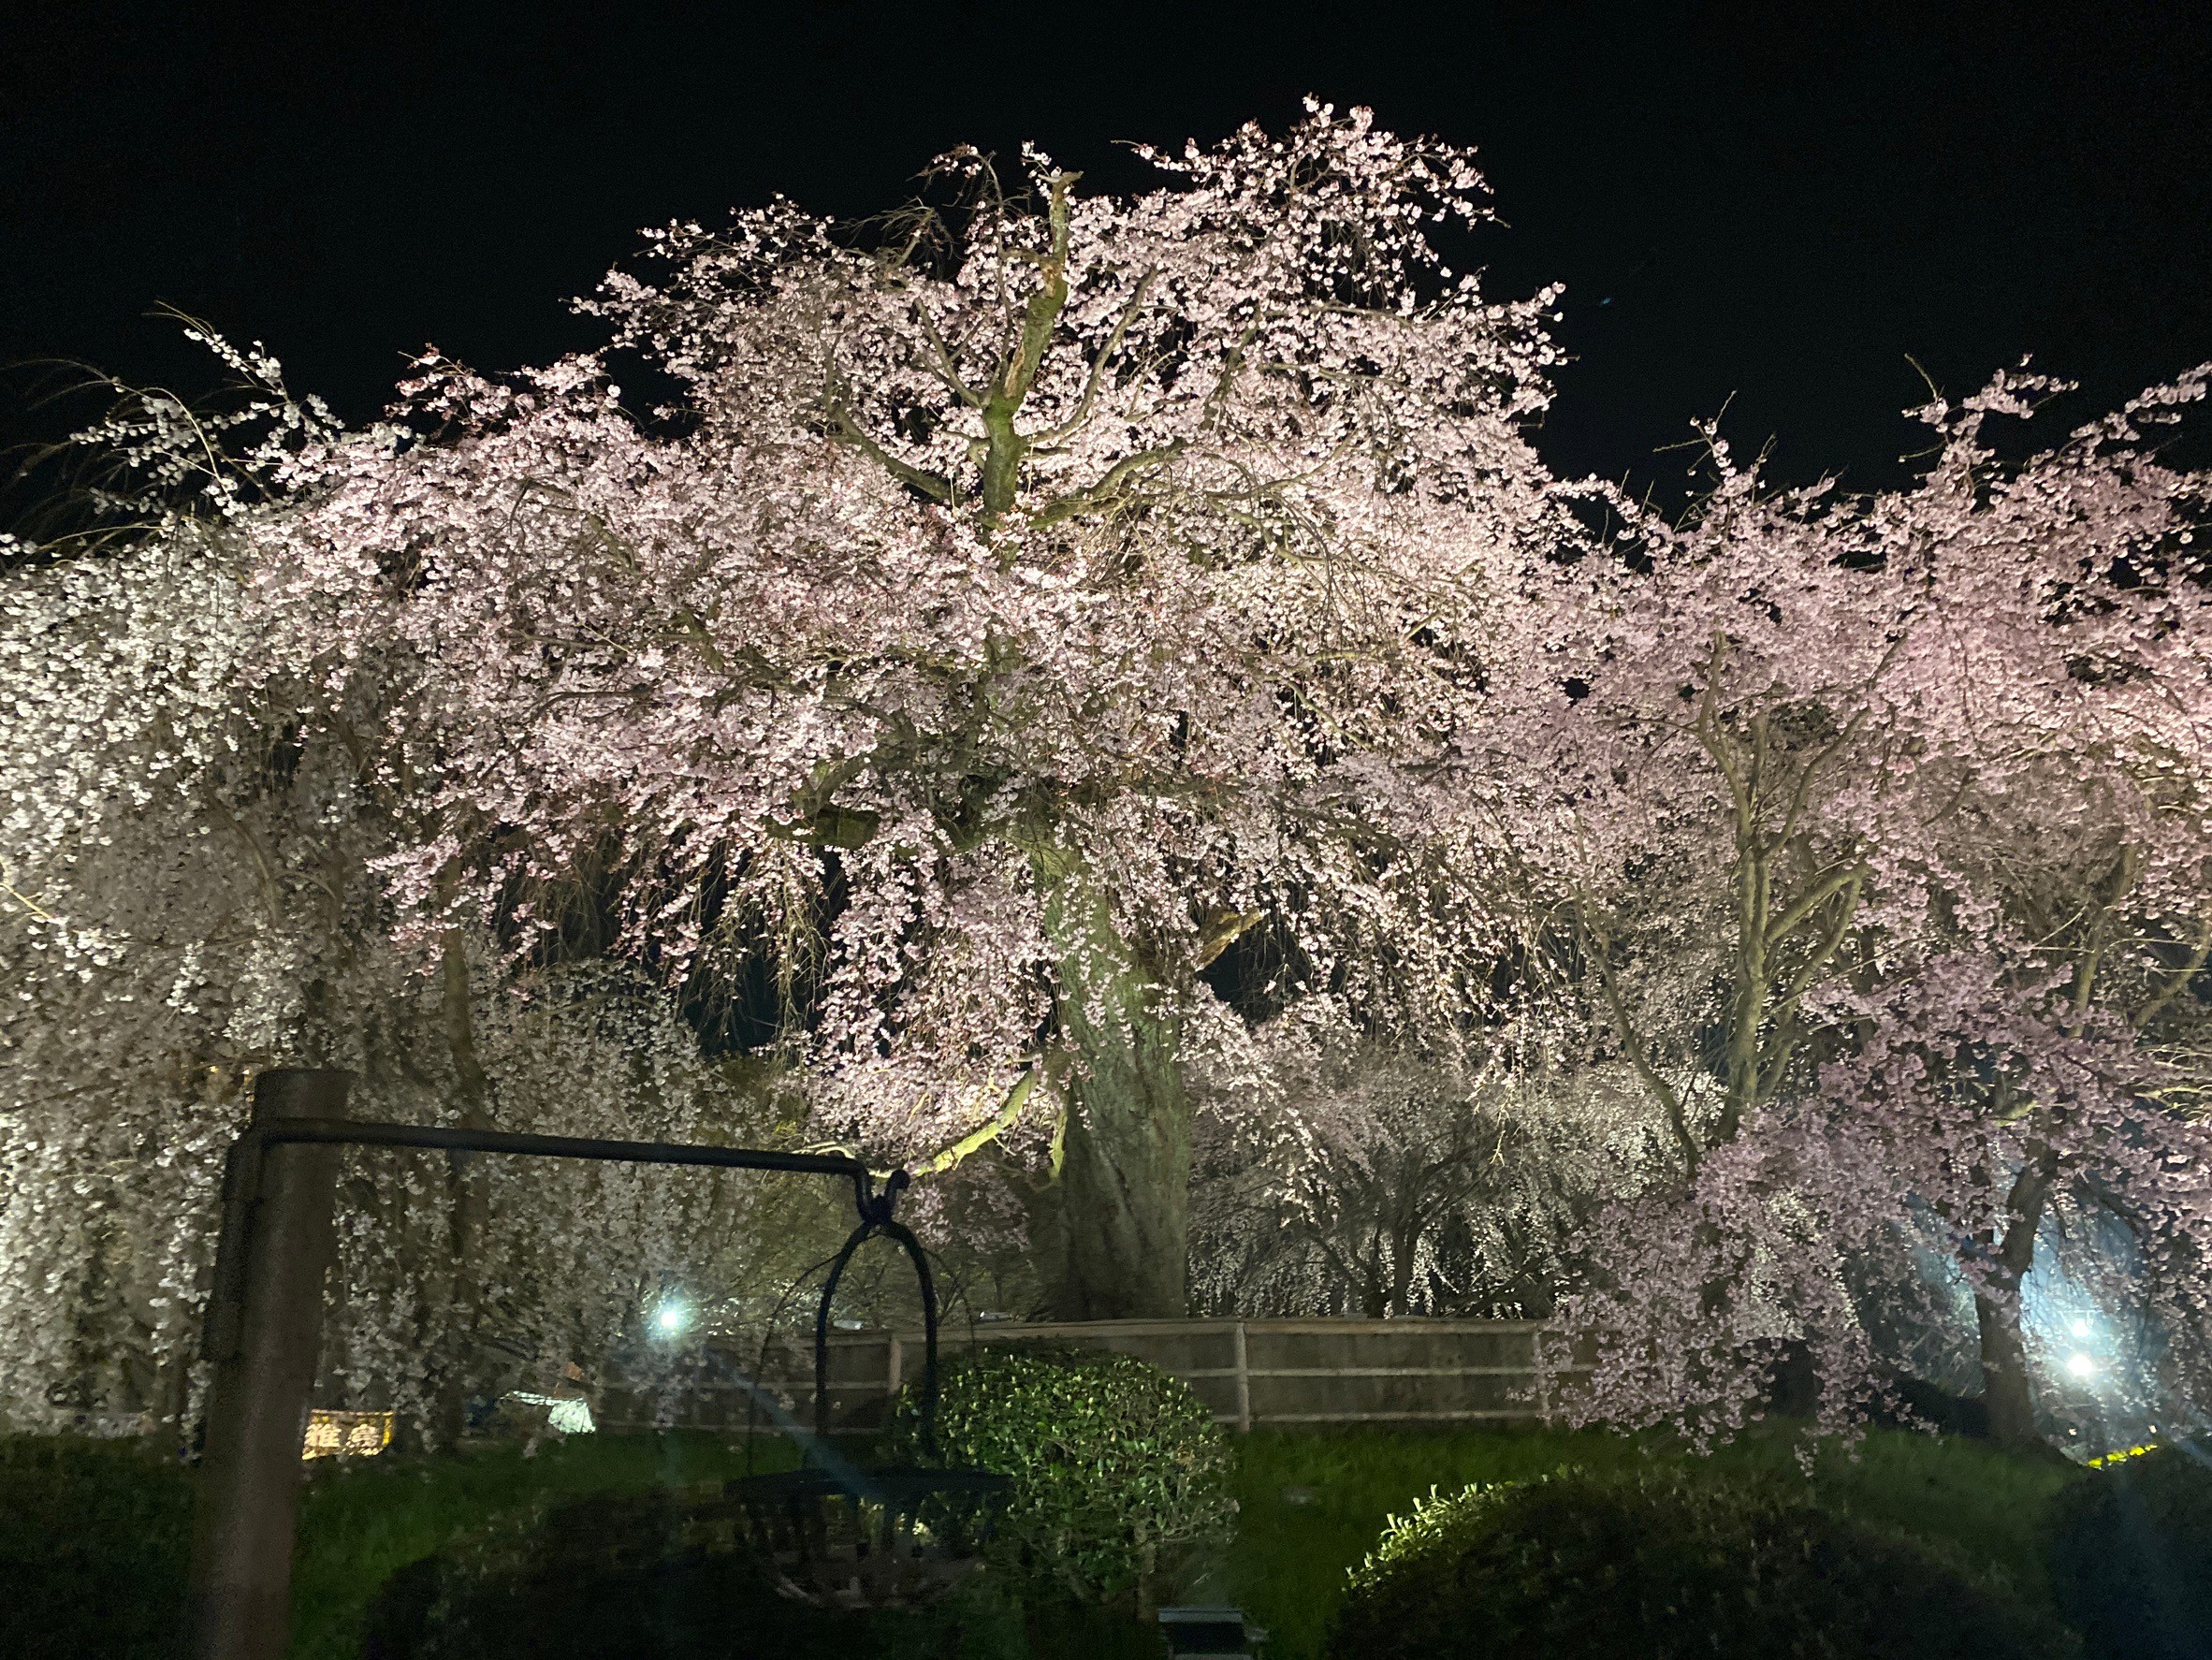 円山公園の夜桜